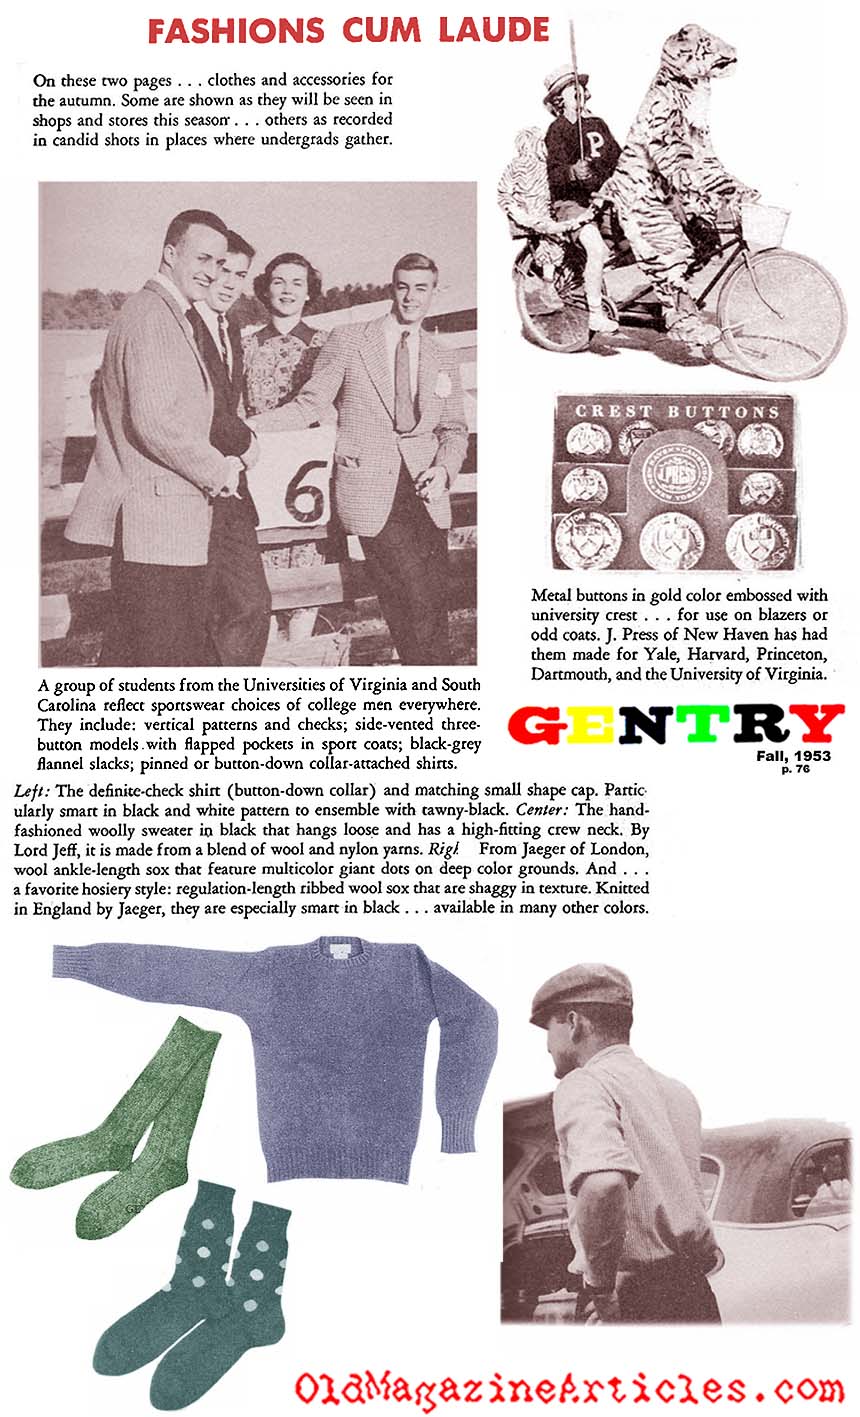 Ivy League College Fashions (Gentry Magazine, 1953) • Gentry Magazine, 1953 •